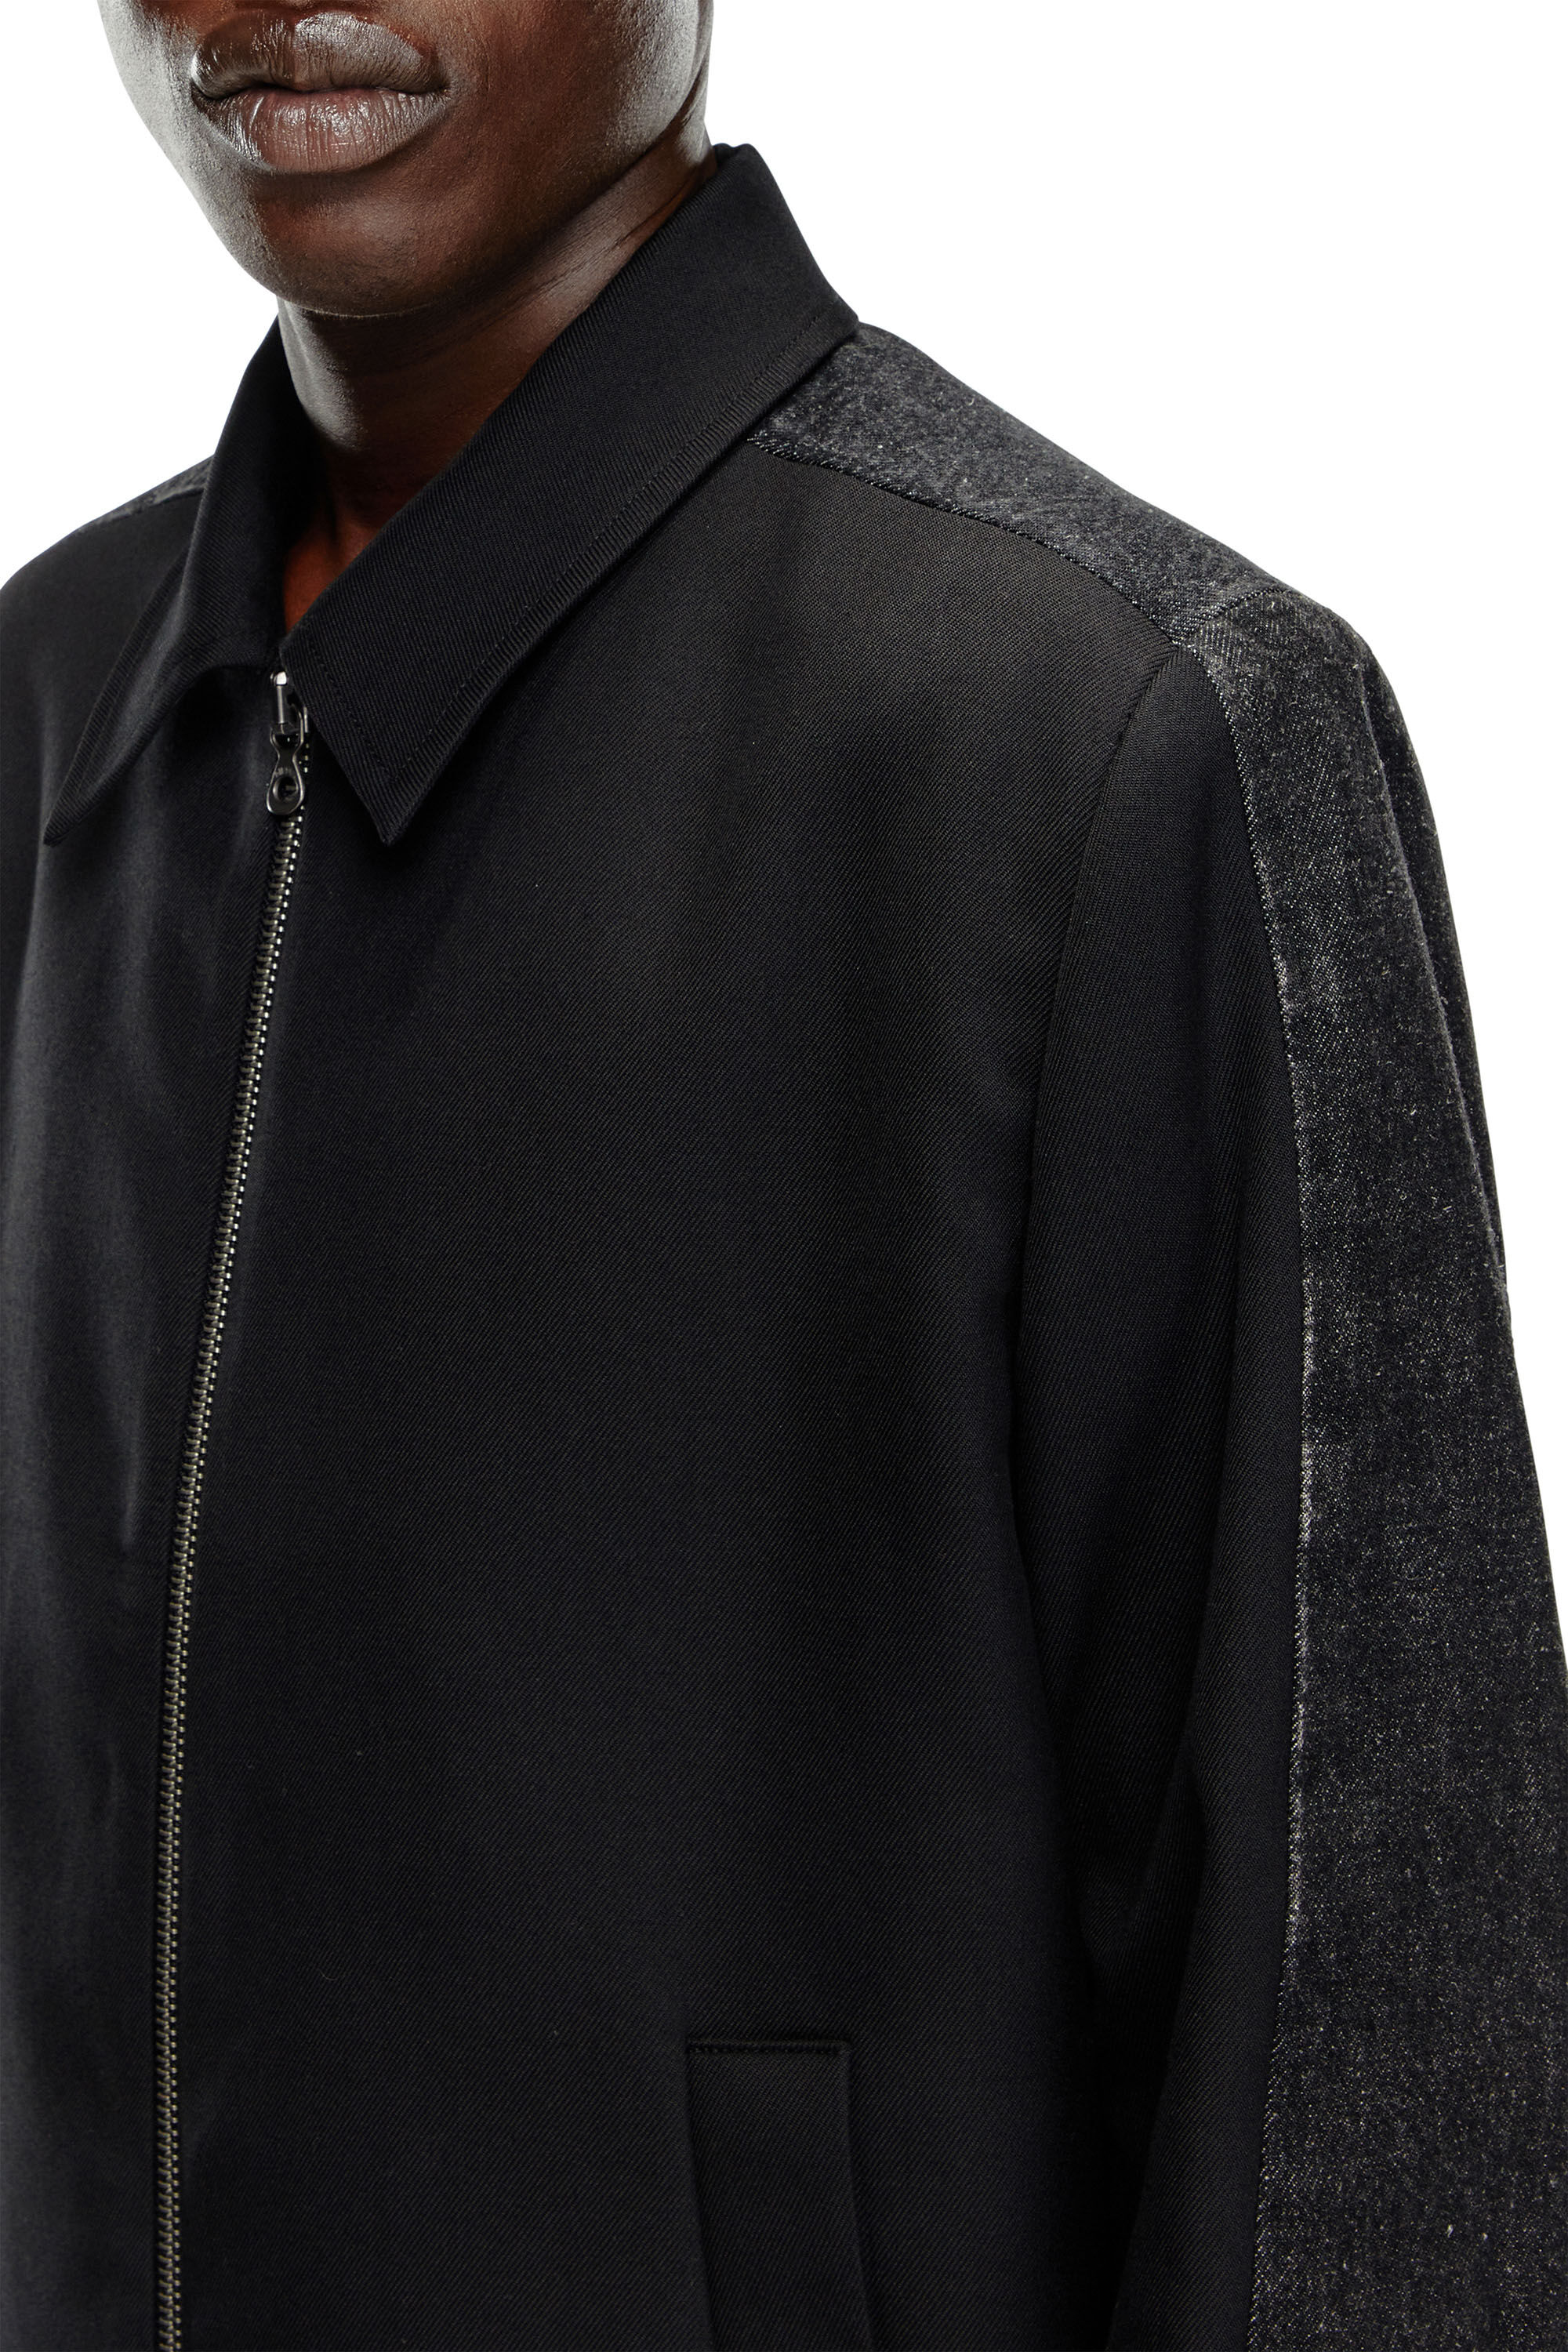 Diesel - J-RHEIN, Male Blouson jacket in wool blend and denim in ブラック - Image 4